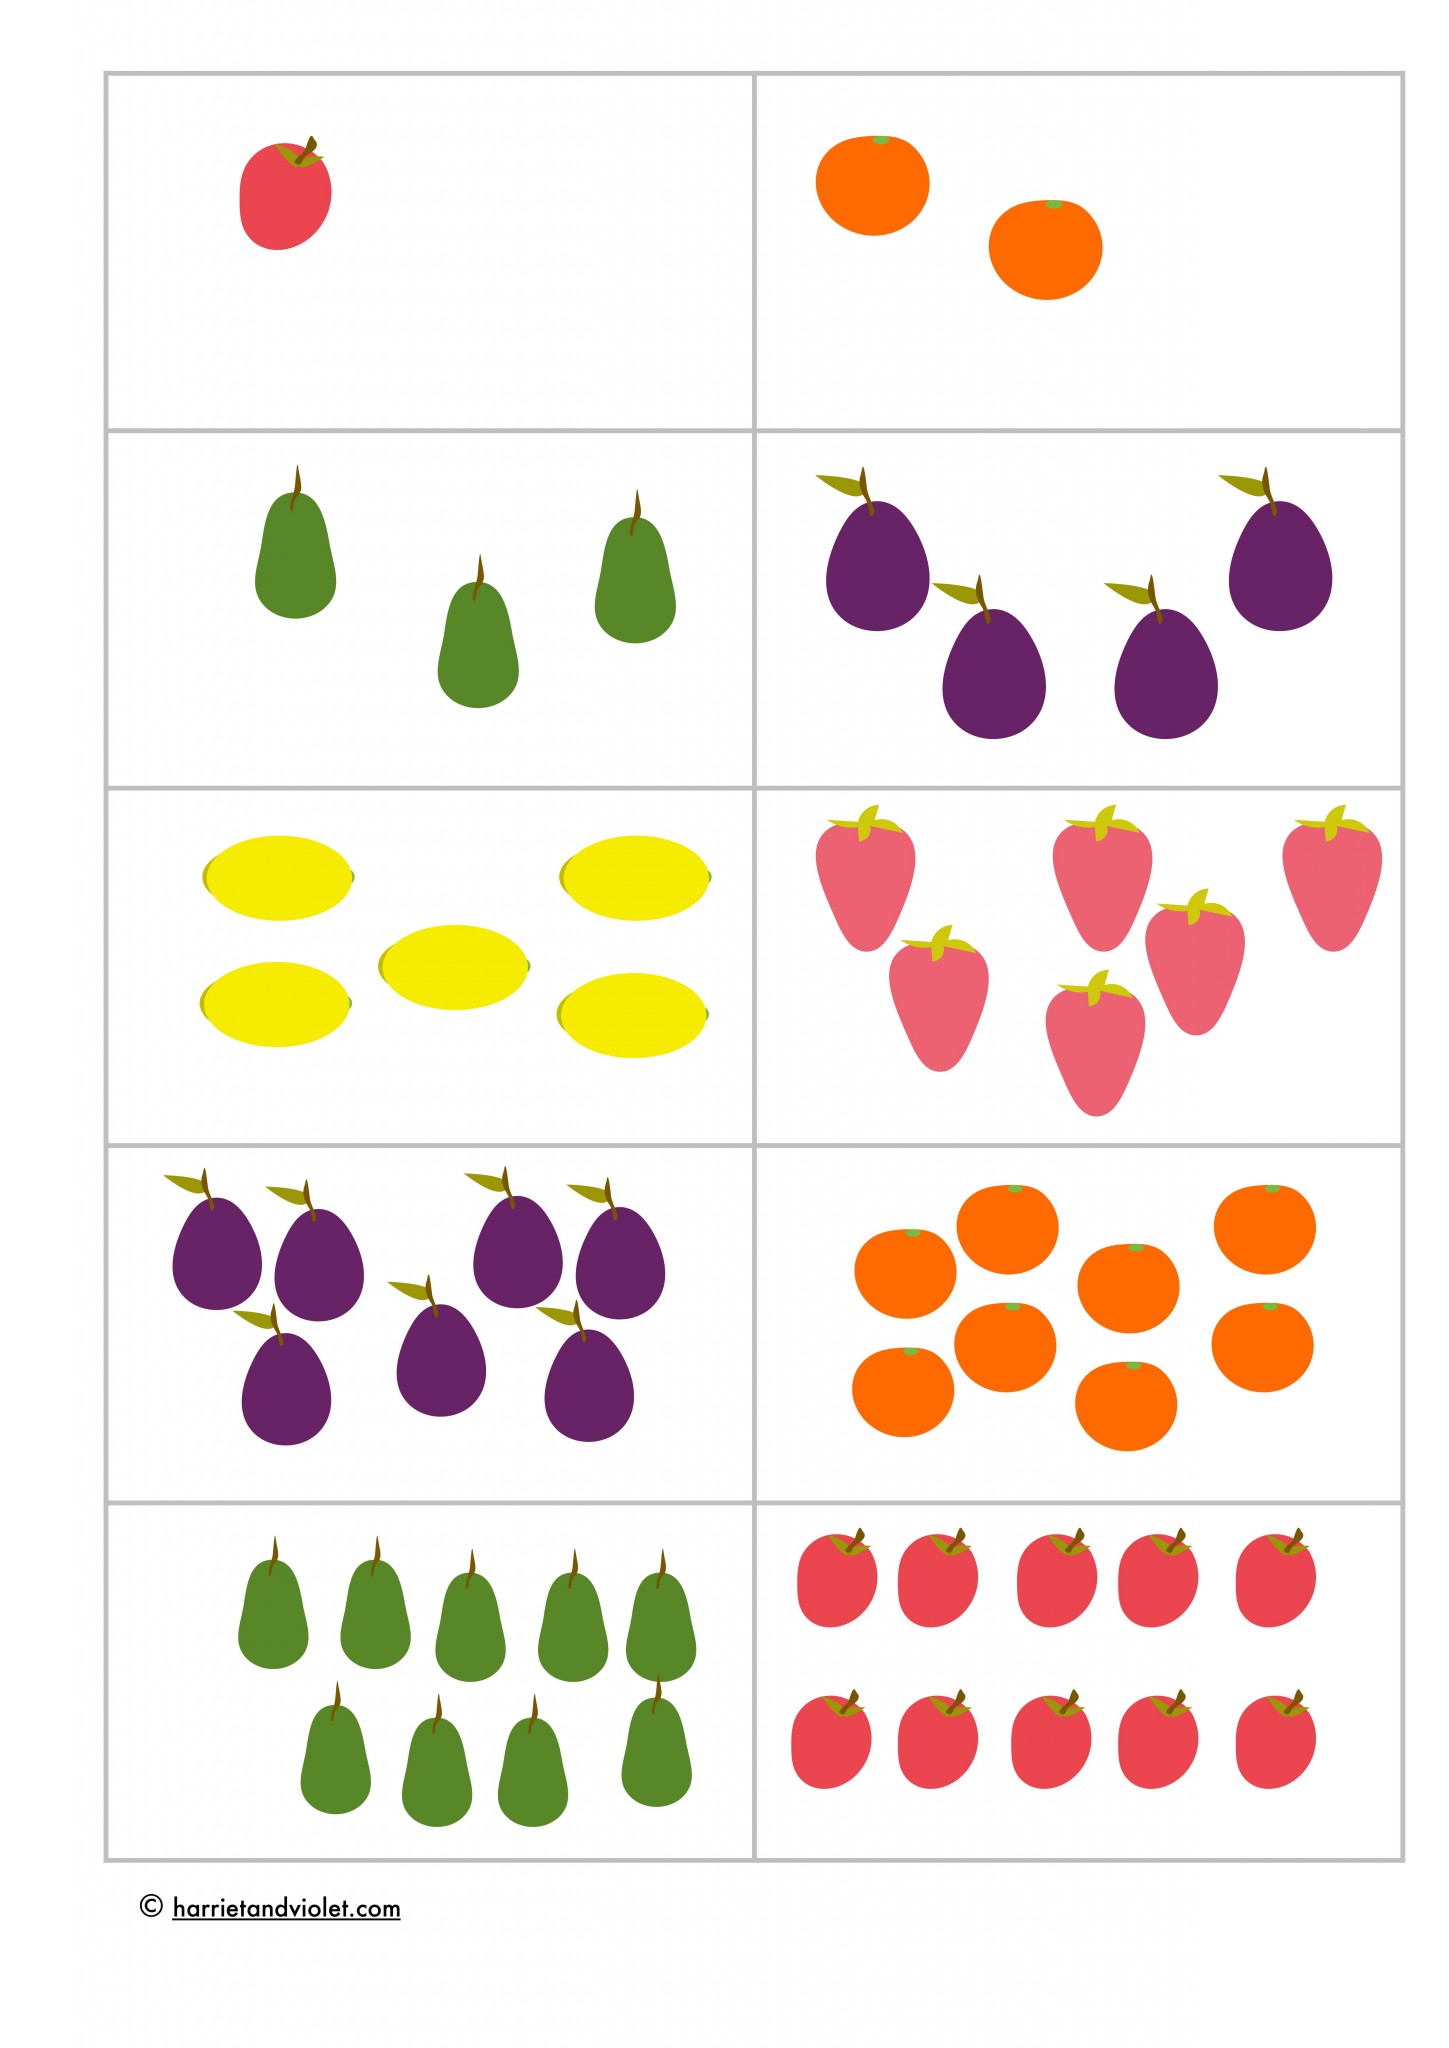 Fruits число. How many Fruits Worksheet. Count Fruits Worksheets. Фрукты Worksheets for Kids how many. Fruit counting for Kids.